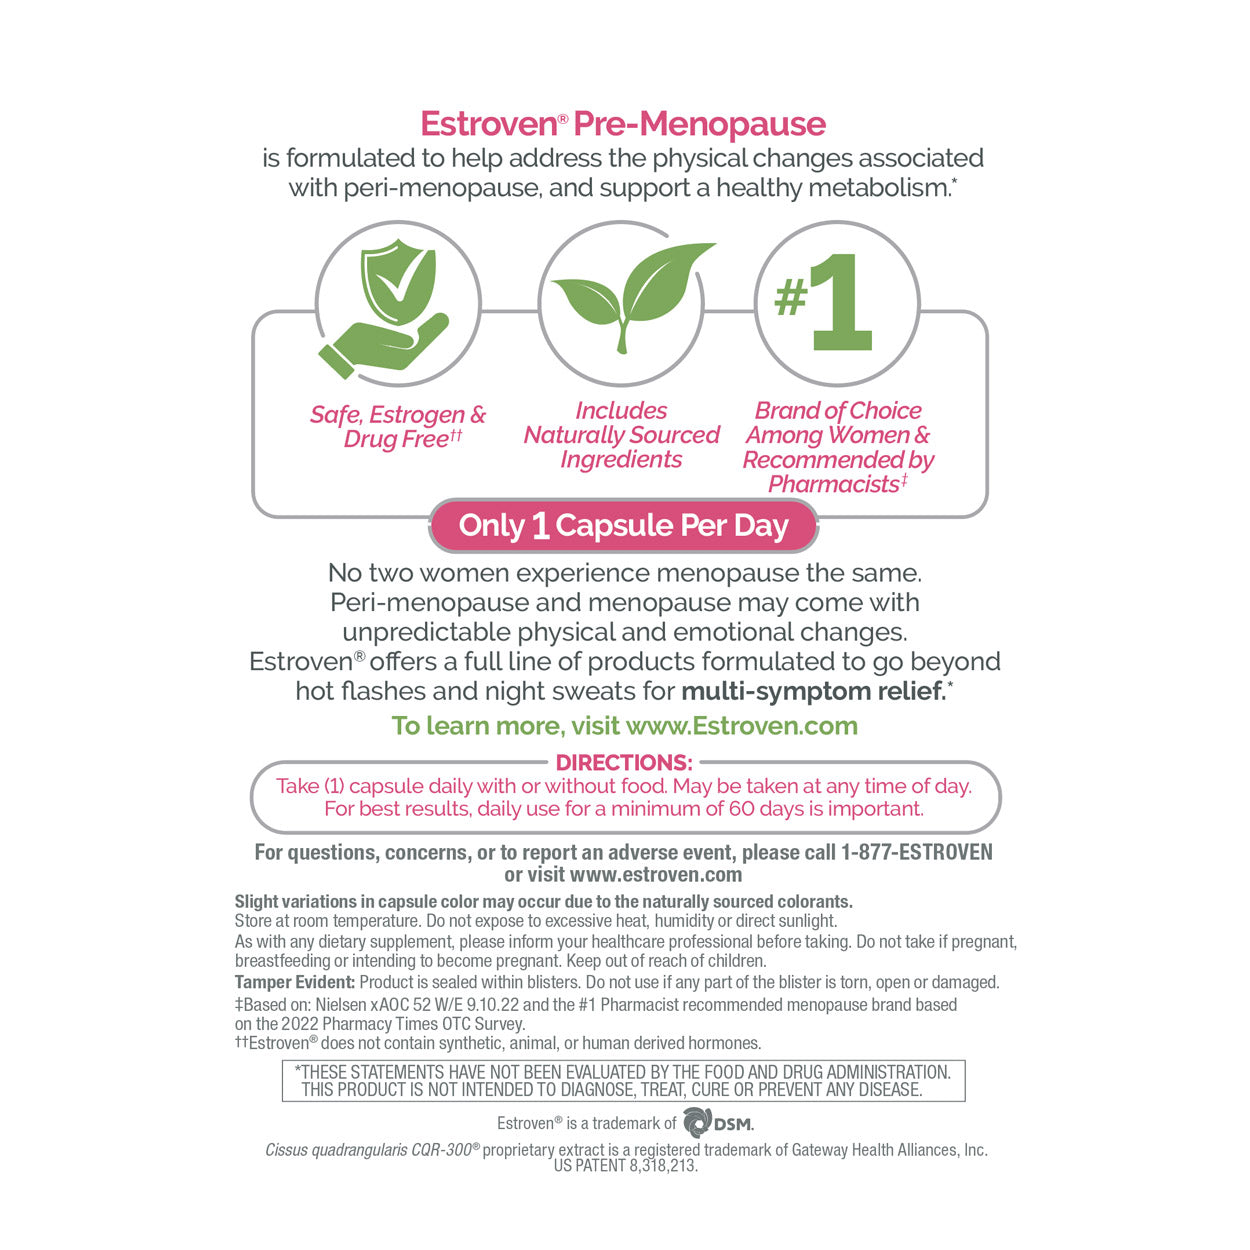 Estroven pre-menopause back label